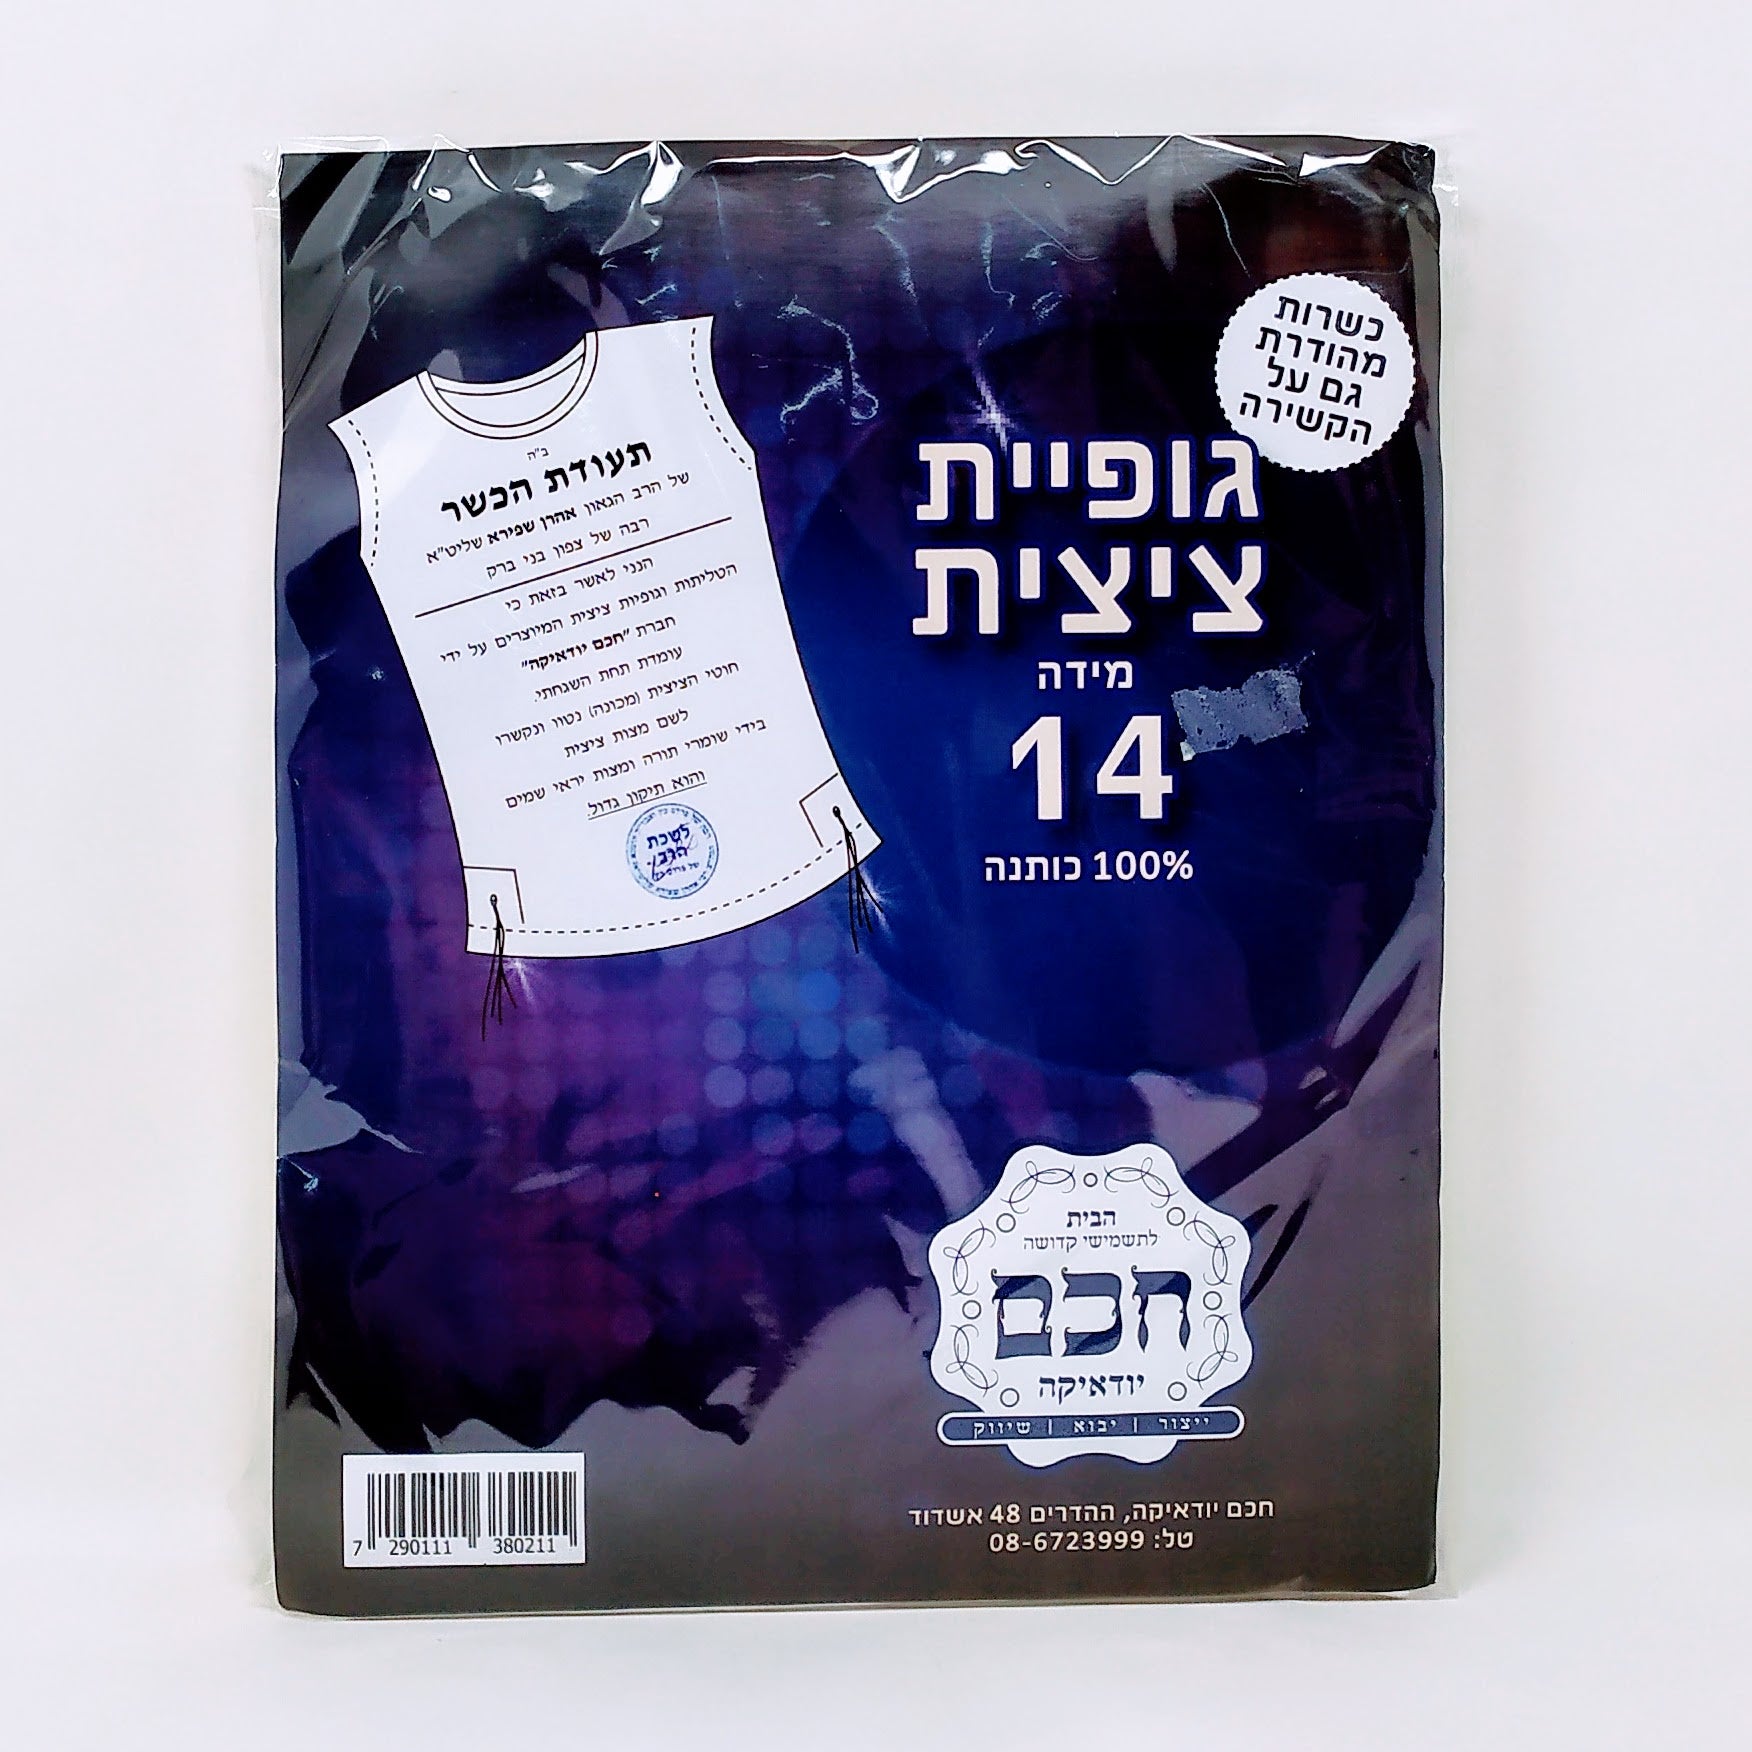 Talit katan marca Jajam talla 14  380211 - Libreria Jerusalem Centro